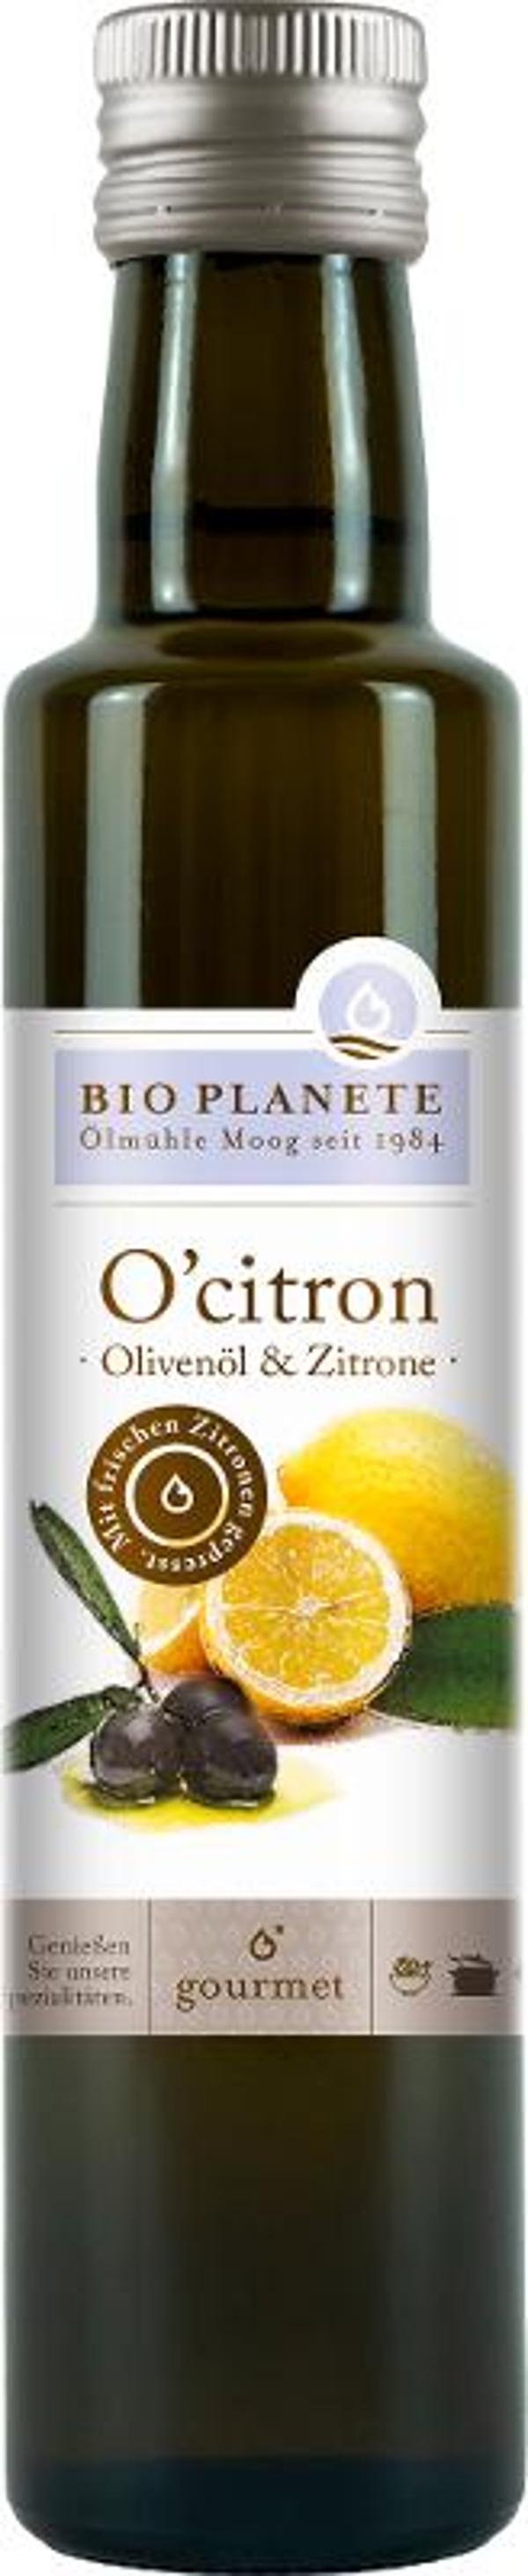 Produktfoto zu Olivenöl o´citron 0,25 l Bio Planete